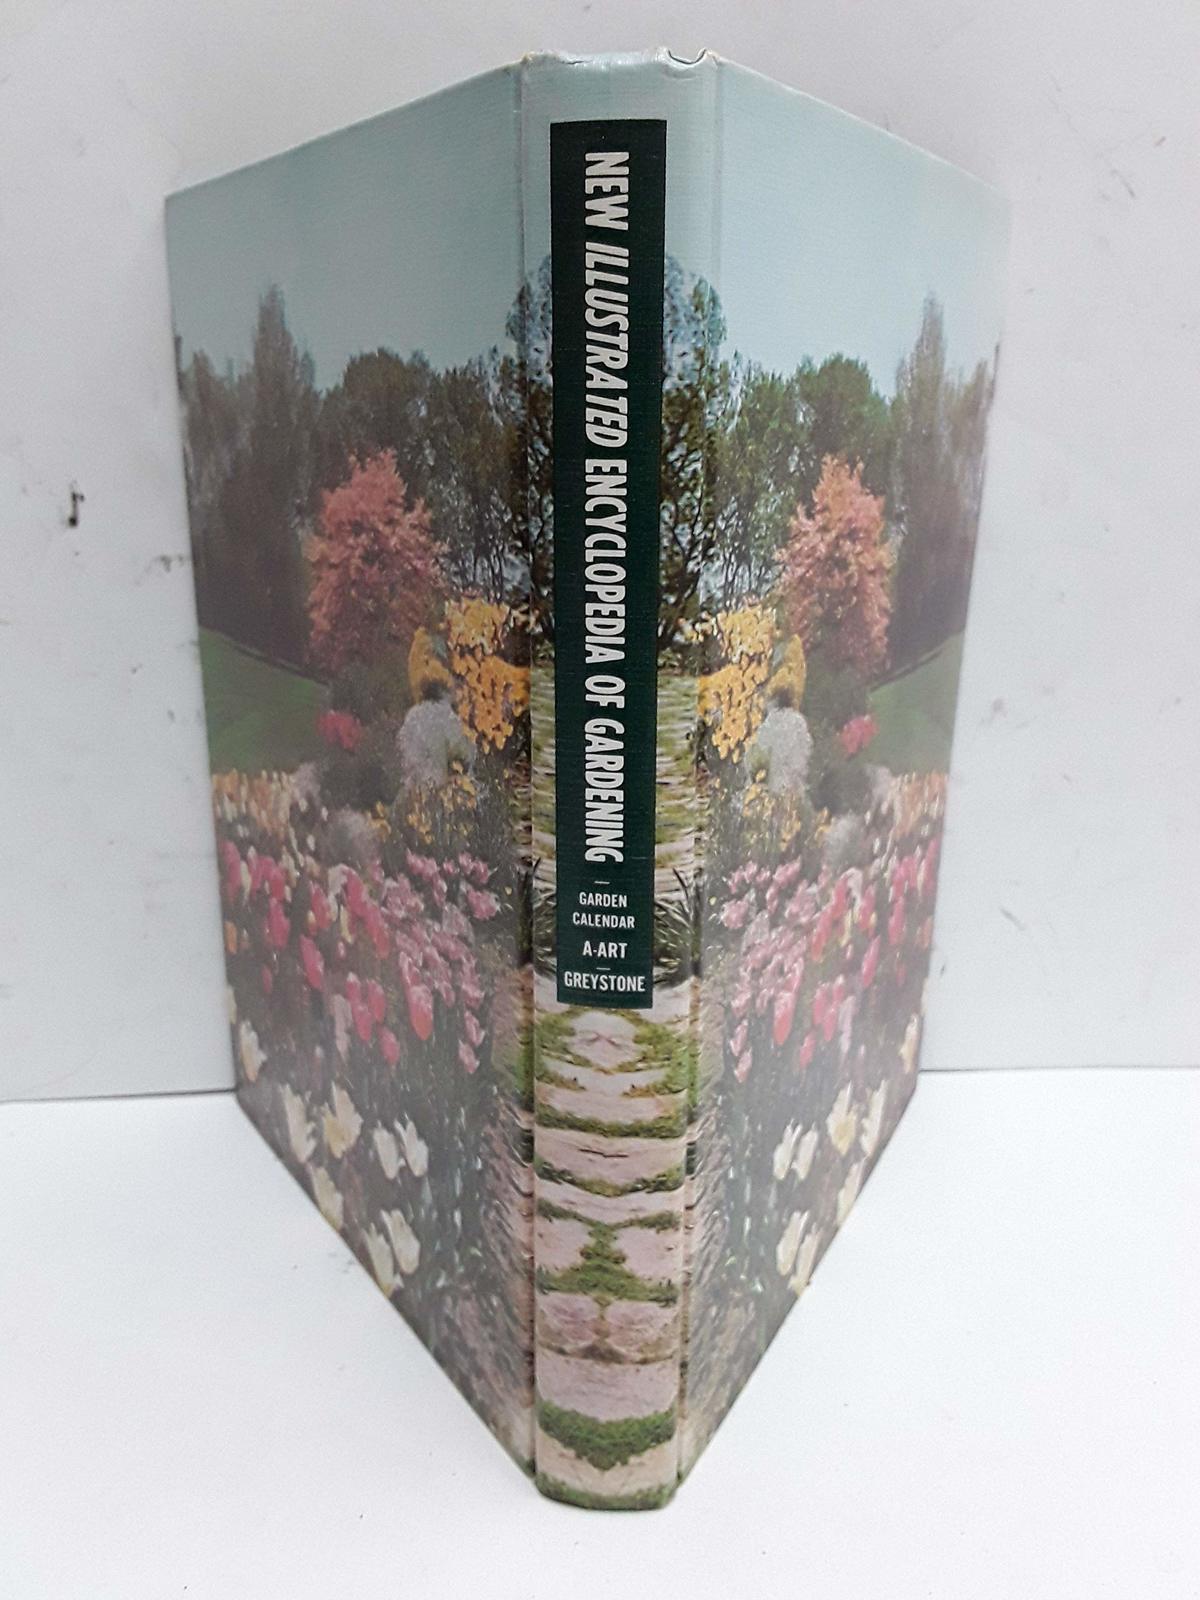 New Illustrated Encyclopedia of Gardening (Volume 1: Garden Calendar, A-Art) [Ha - $7.31